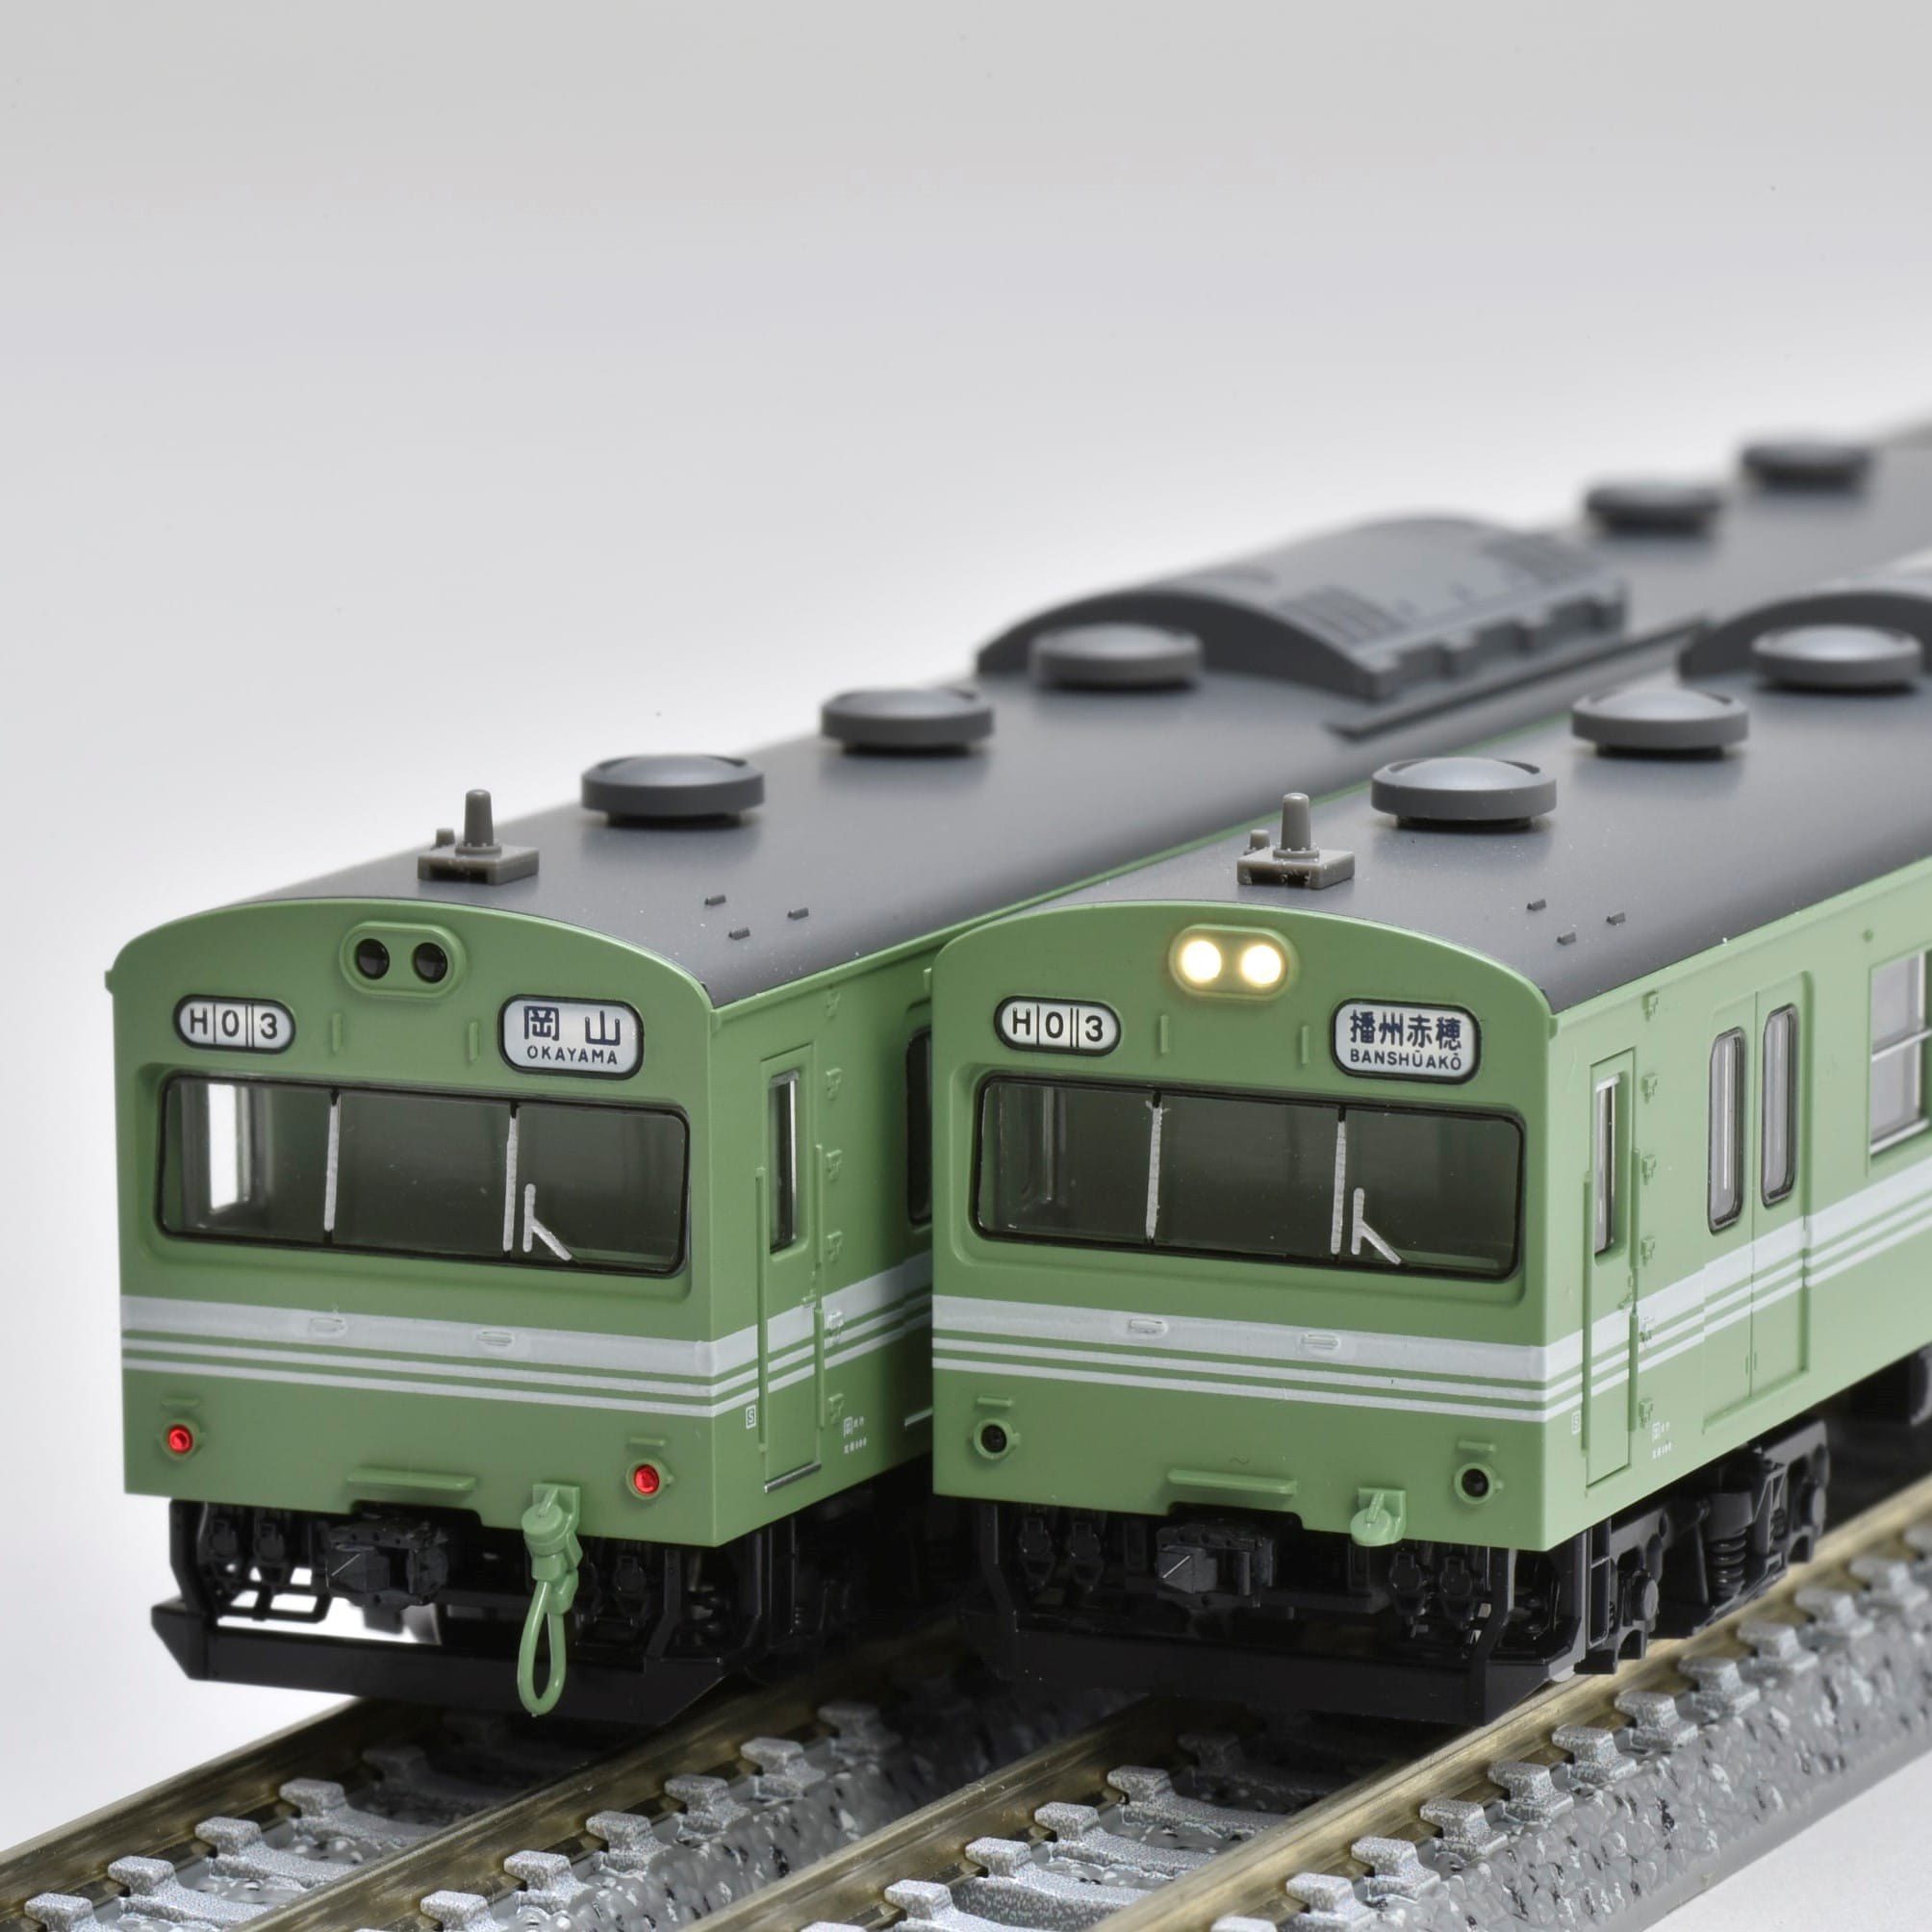 MICROACE 鉄道模型 Nゲージ A-0537 103系 岡山色 8両セット - コレクション